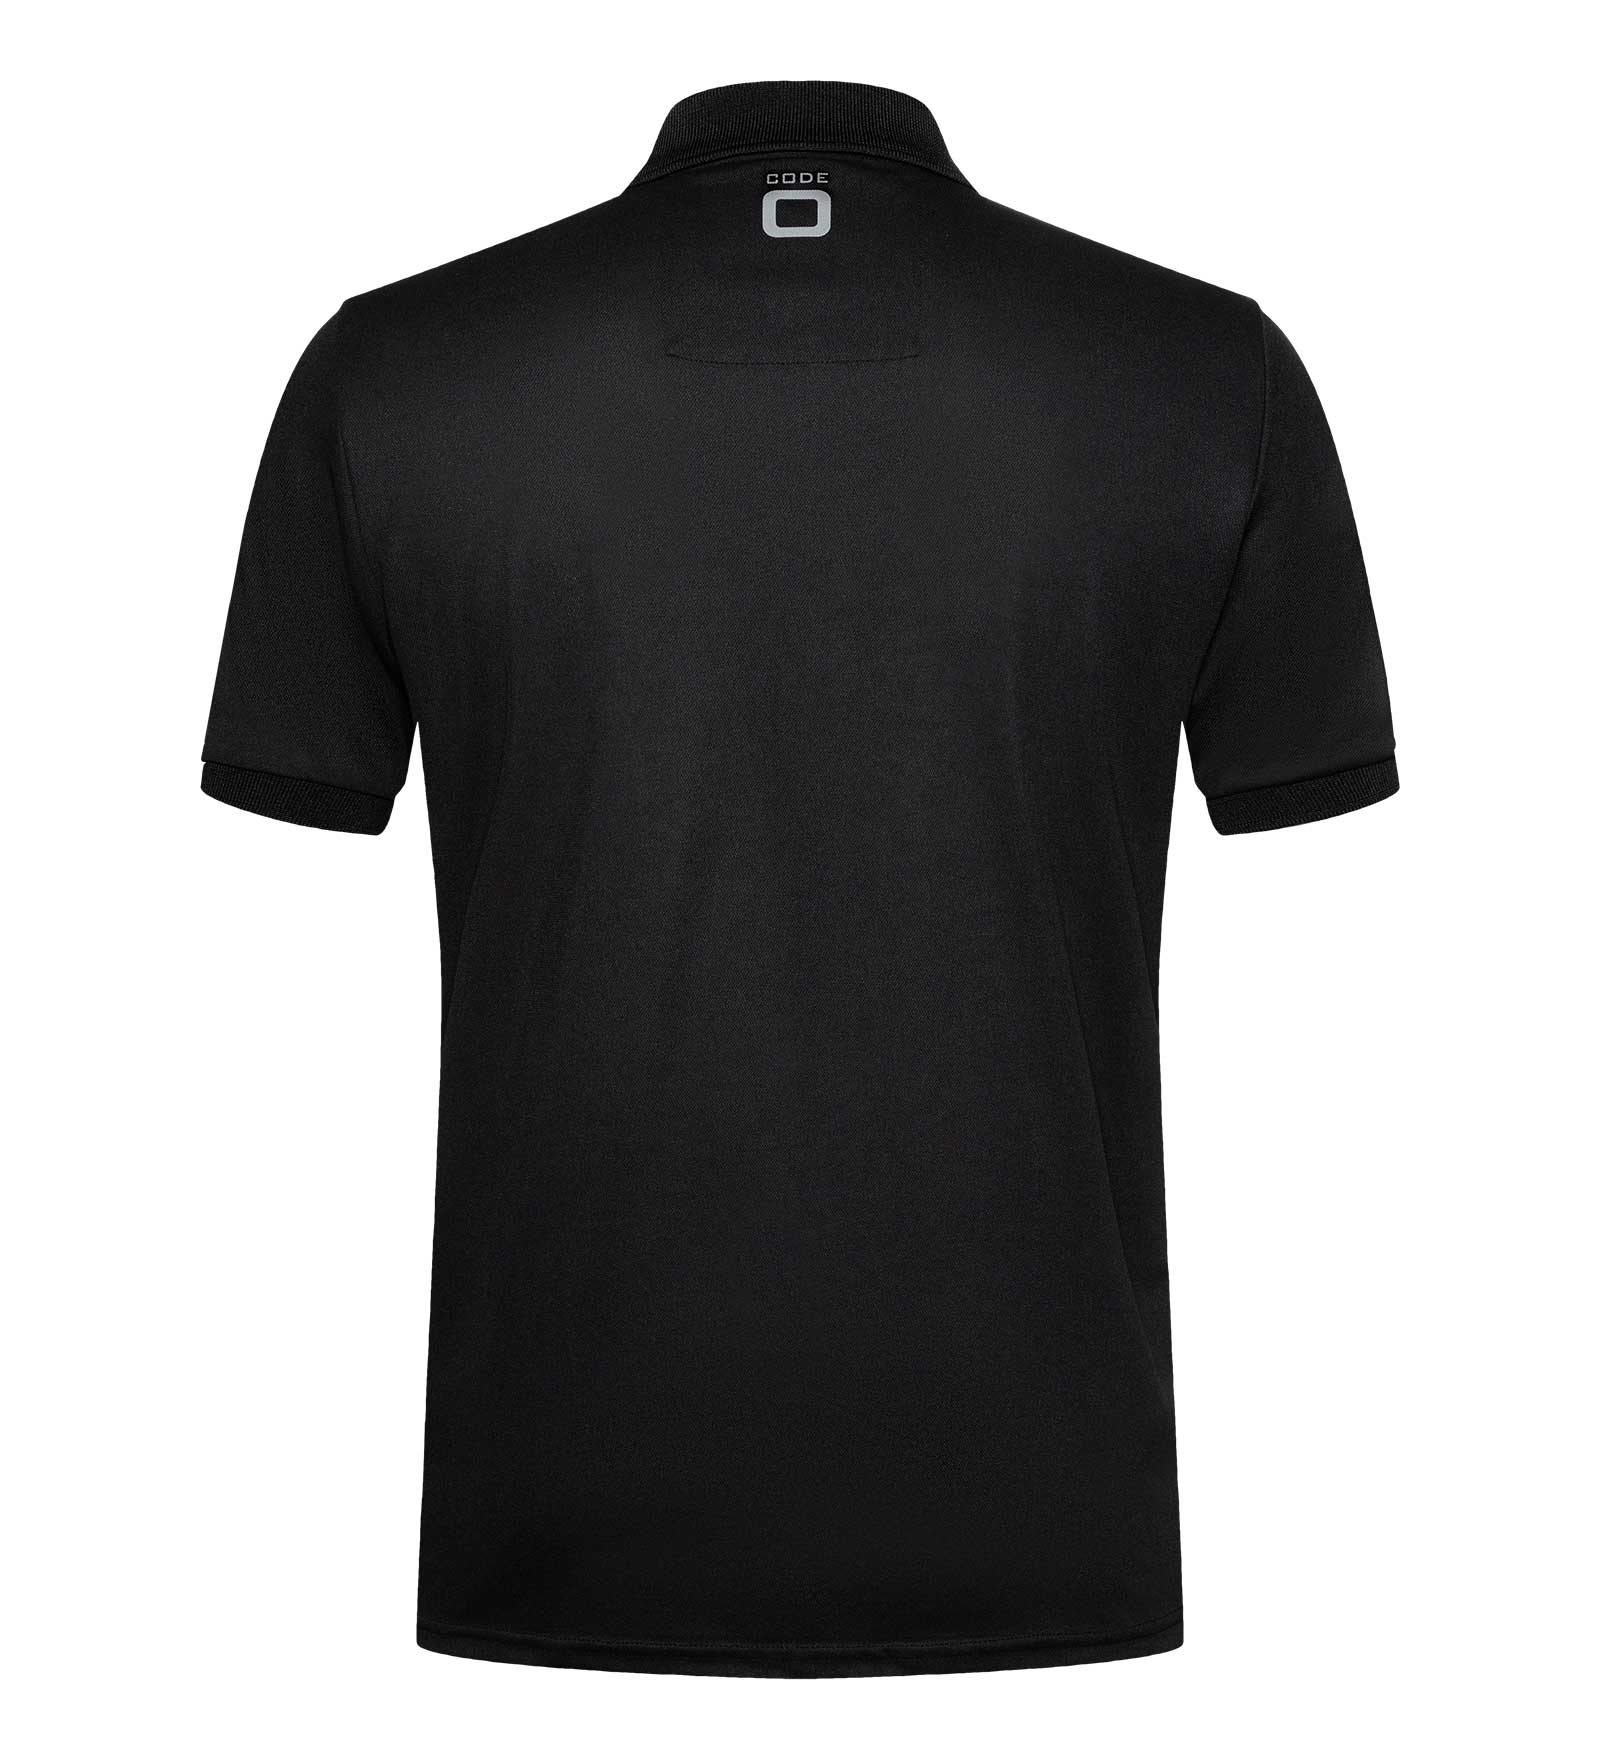 Polo shirt quick-dry black